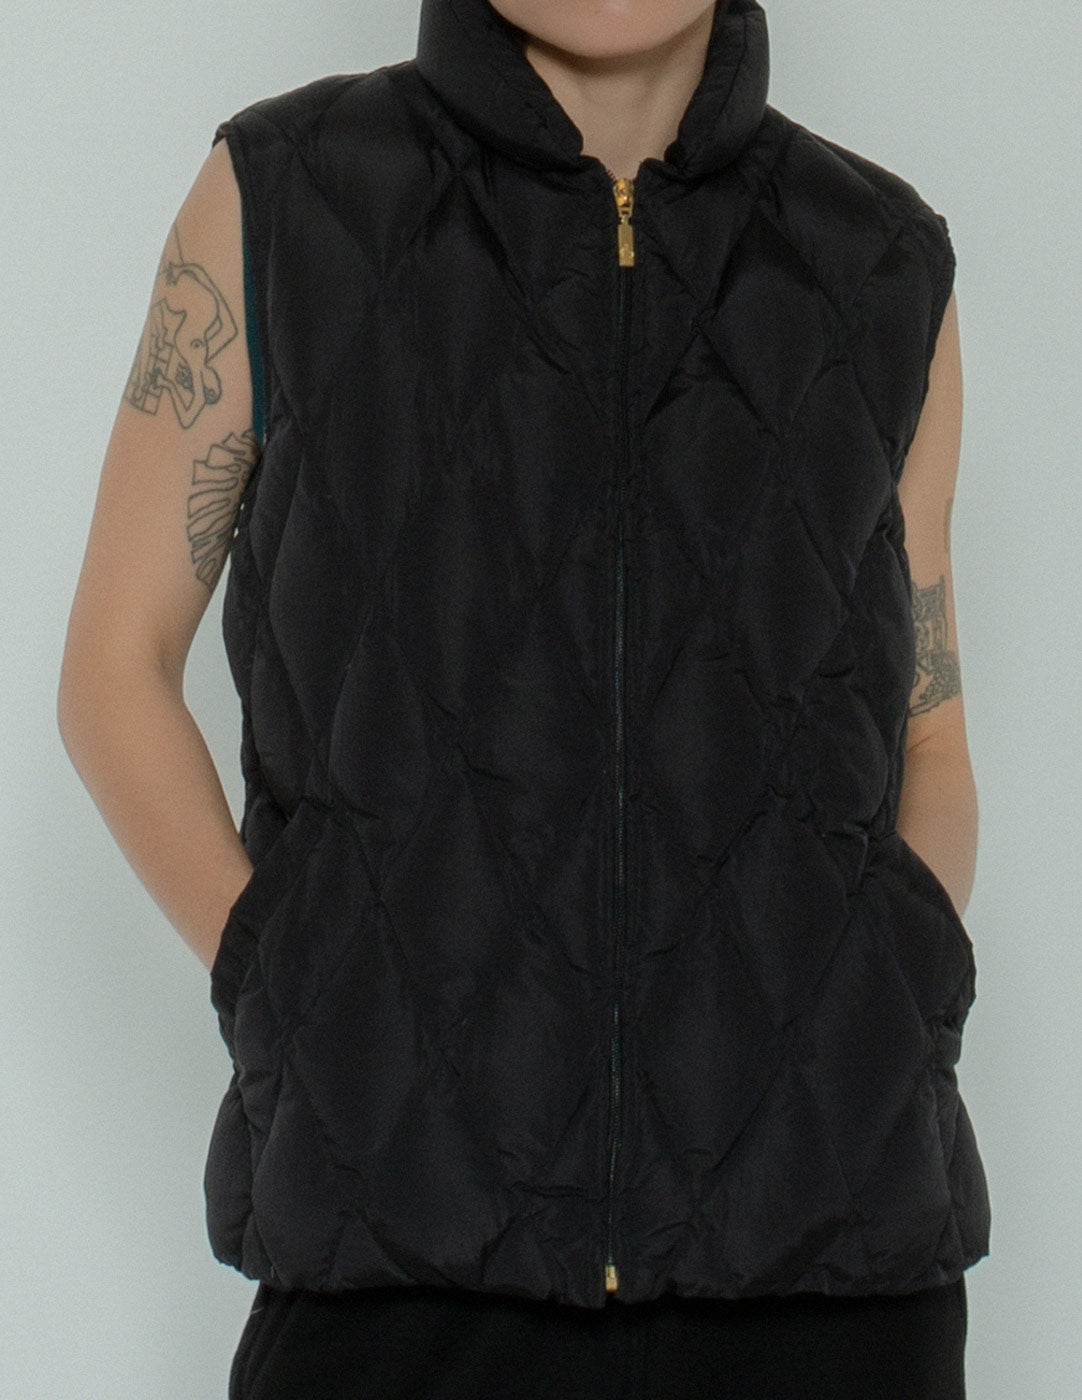 Moncler vintage down puffer vest front detail